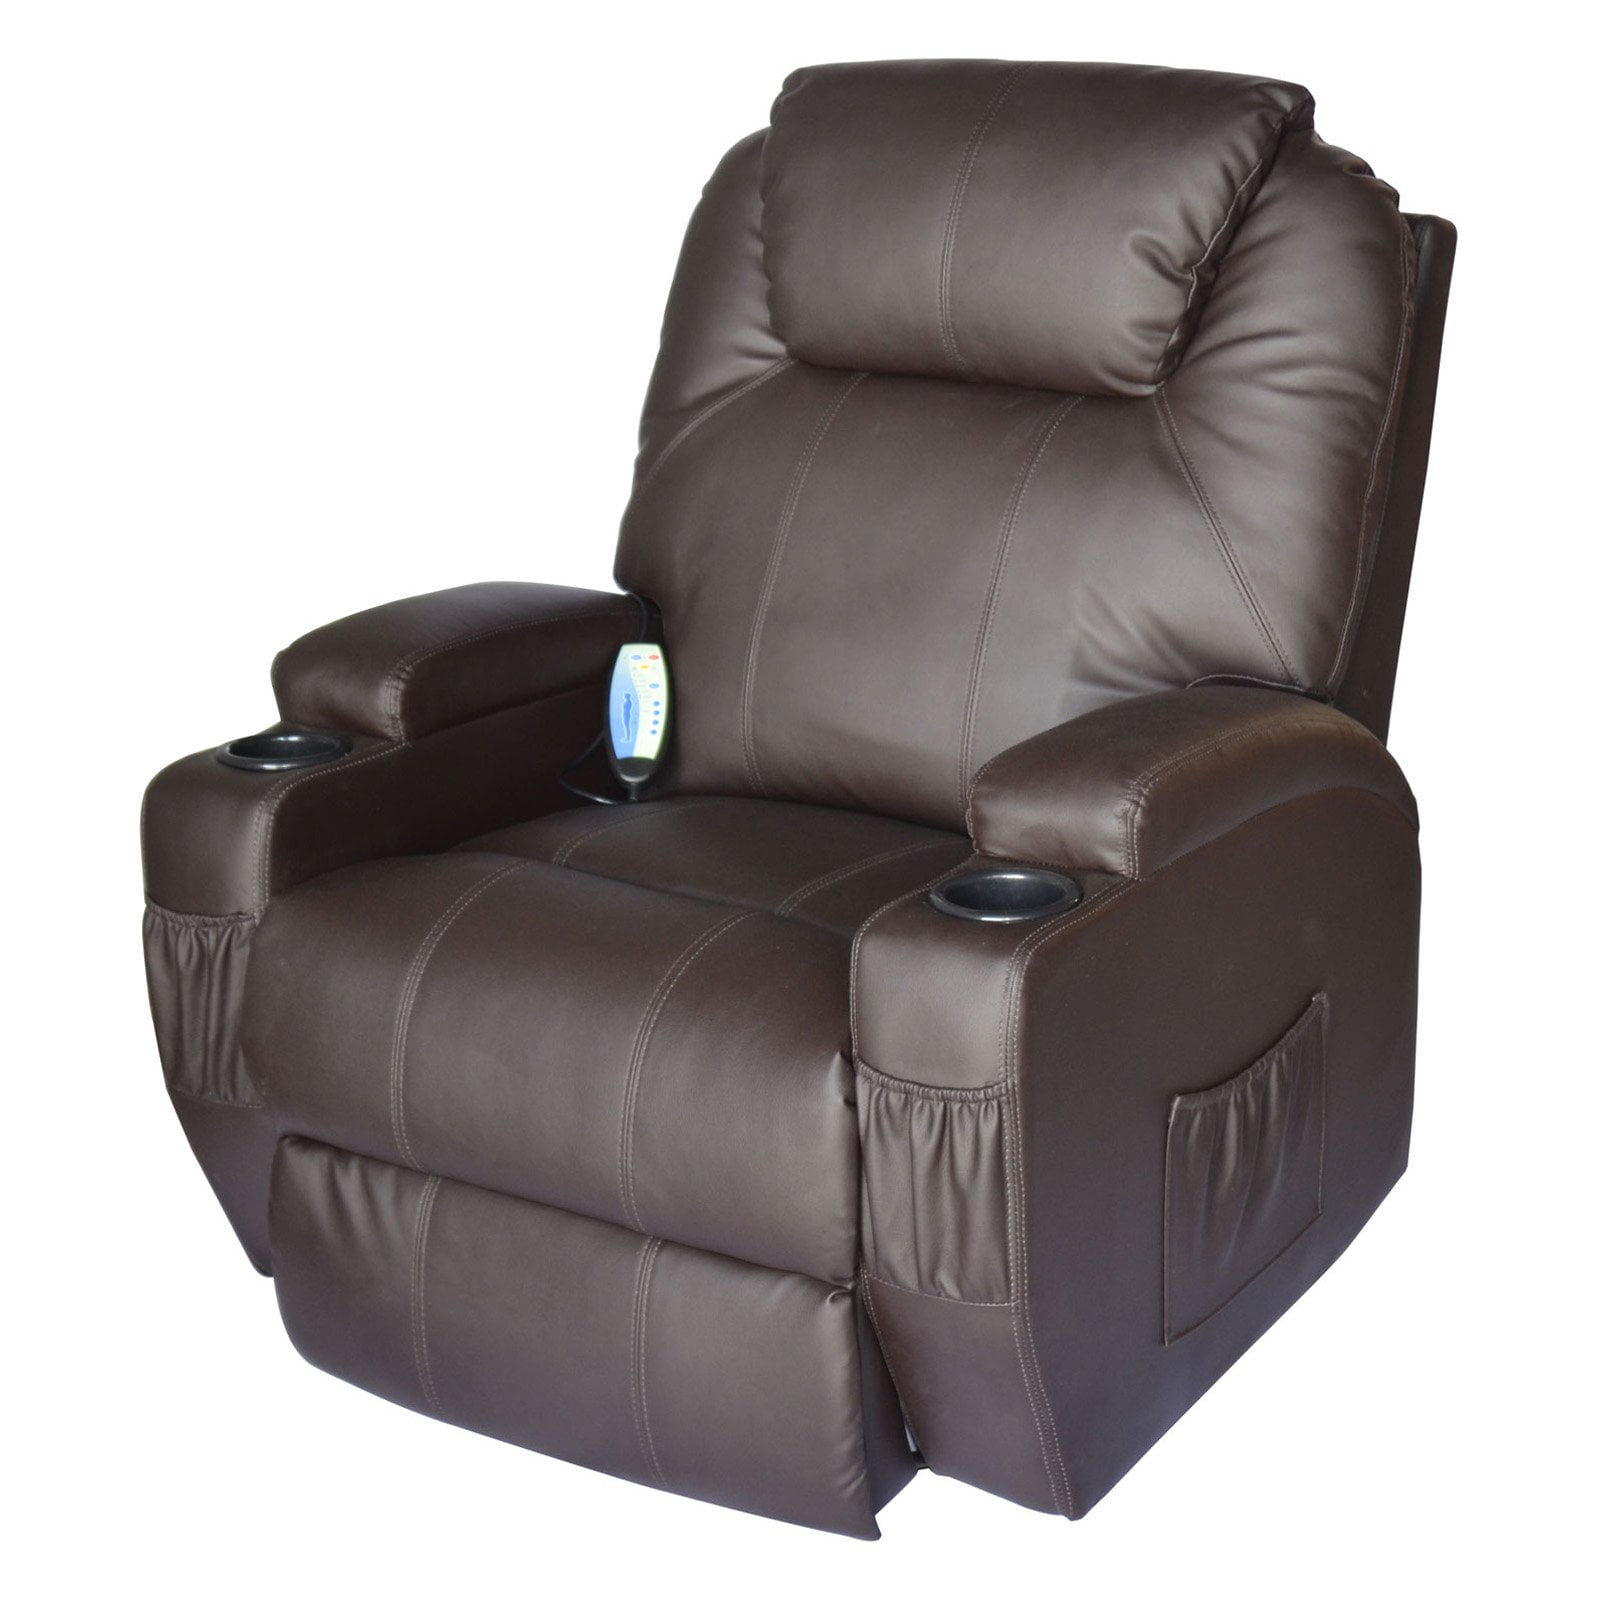 HomCom Heating Vibrating PU Leather Massage Recliner Chair - Walmart.com